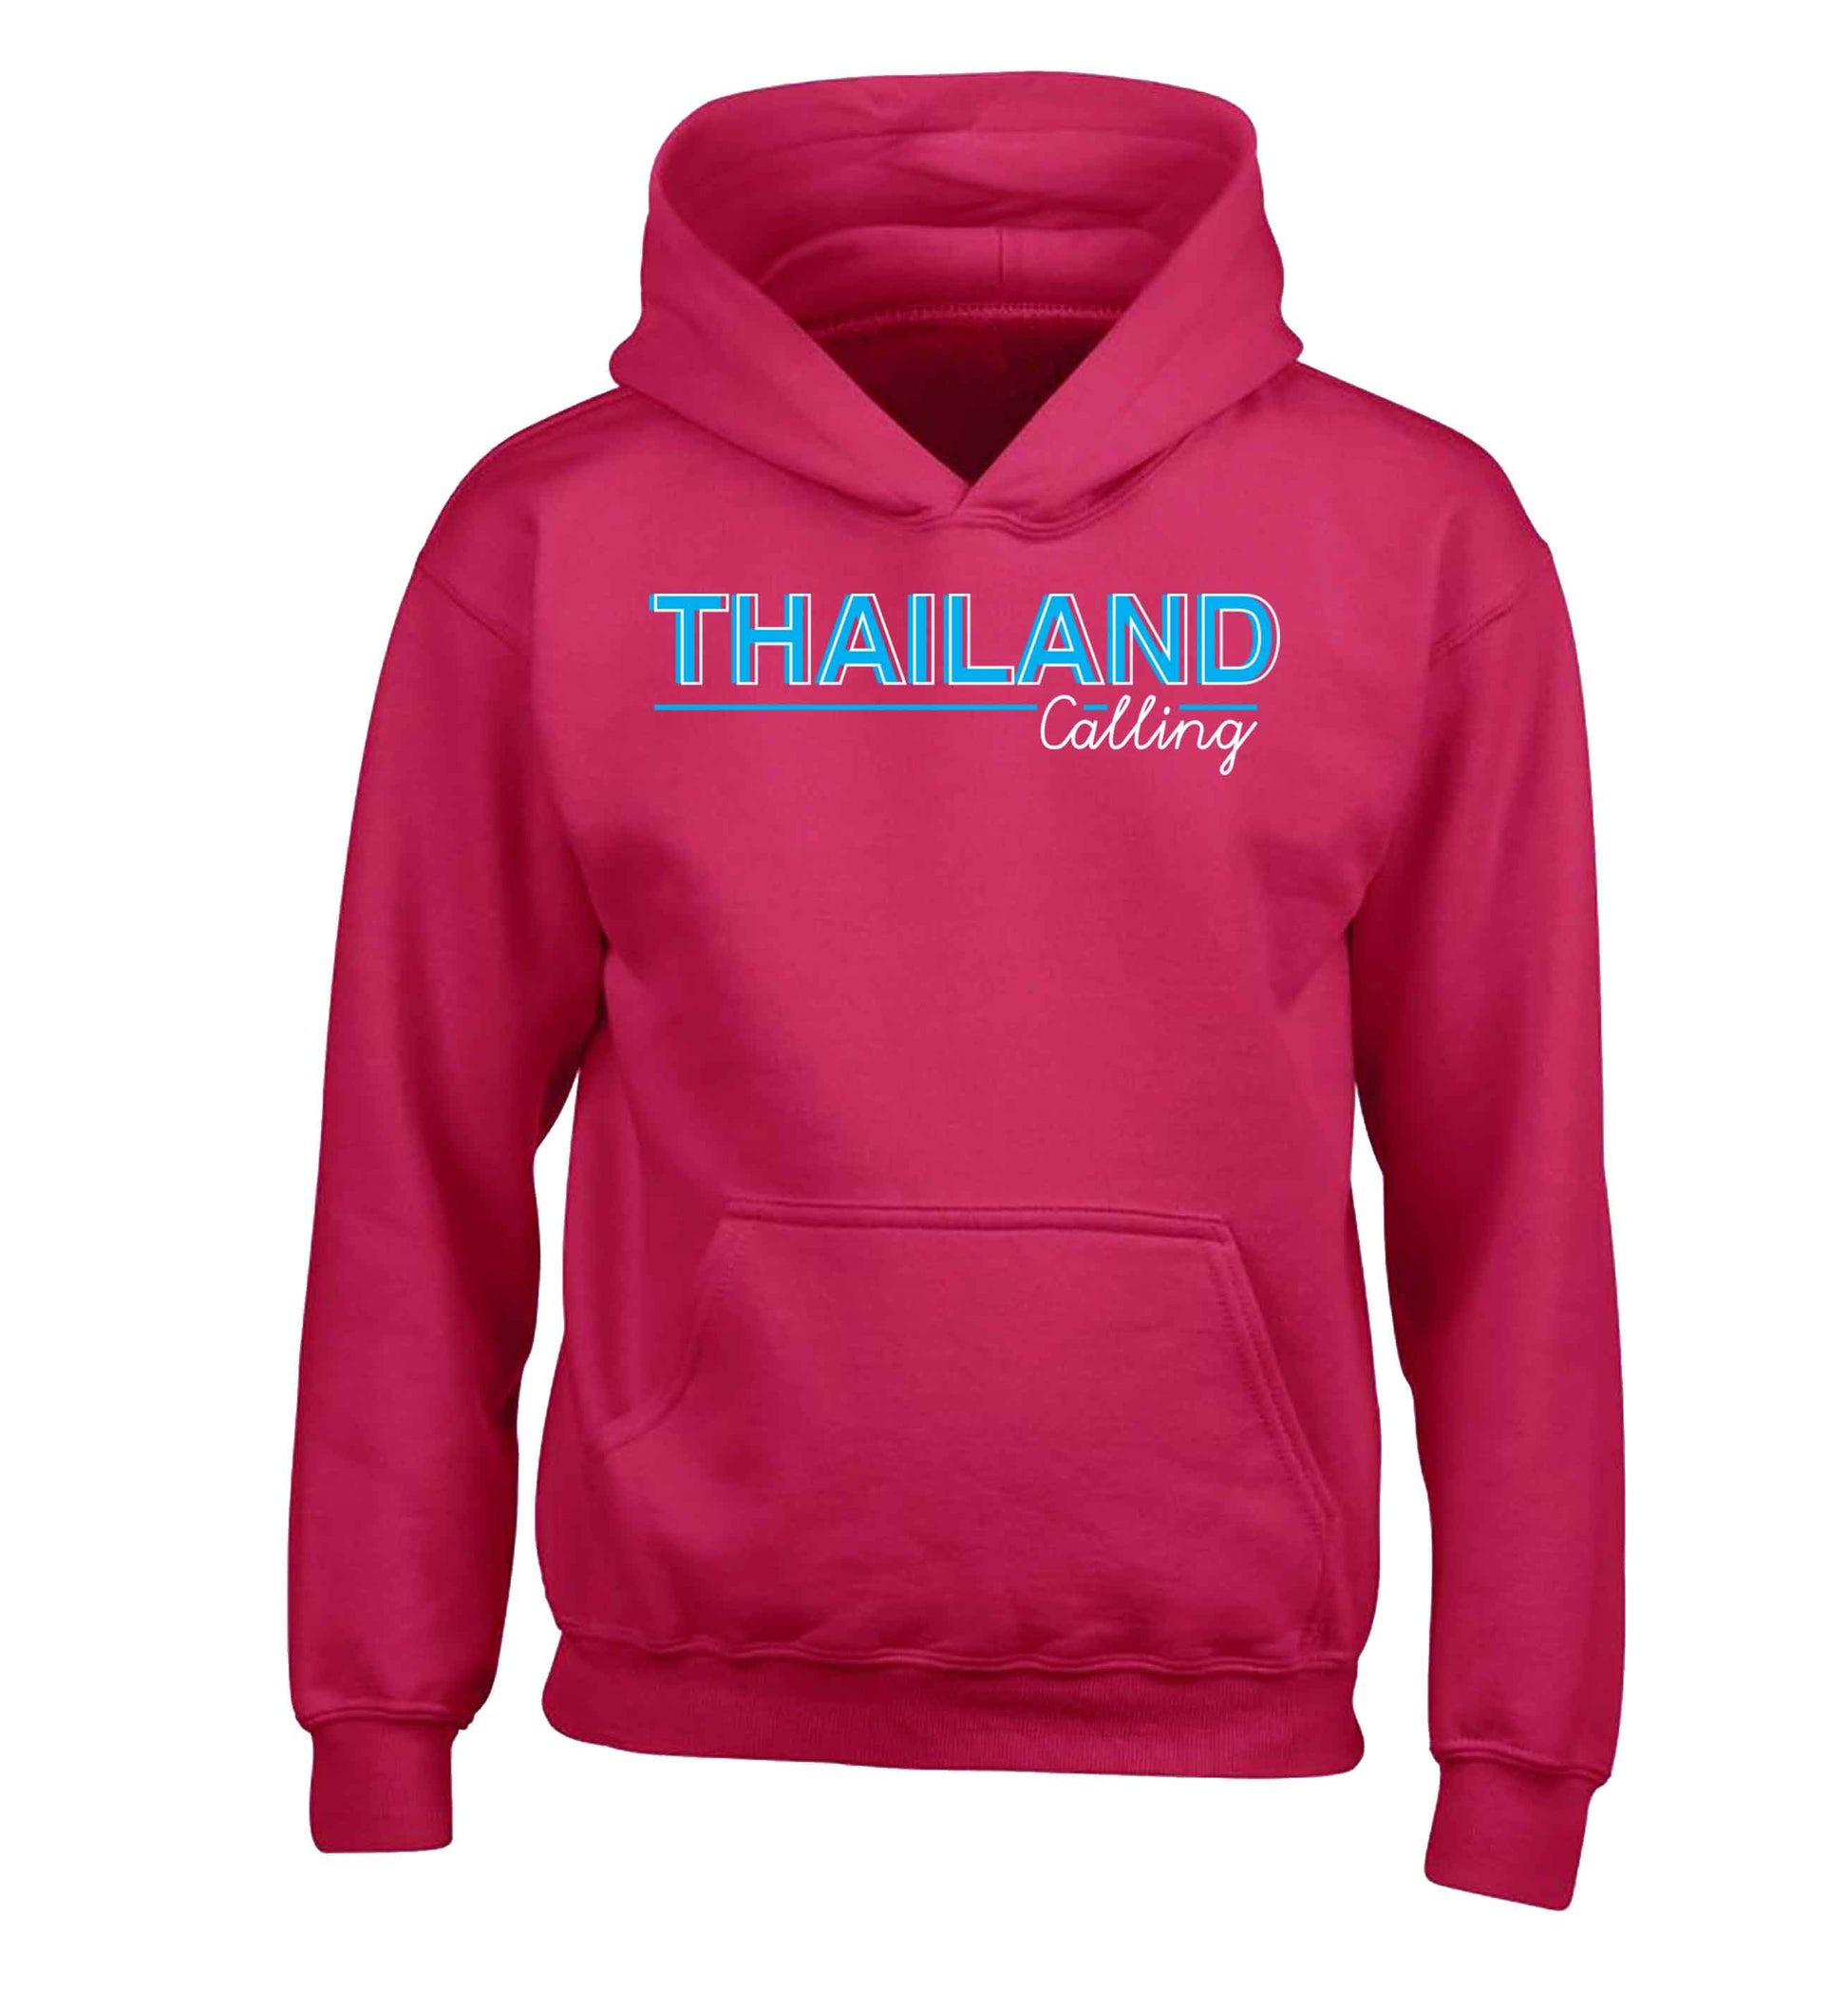 Thailand calling children's pink hoodie 12-13 Years